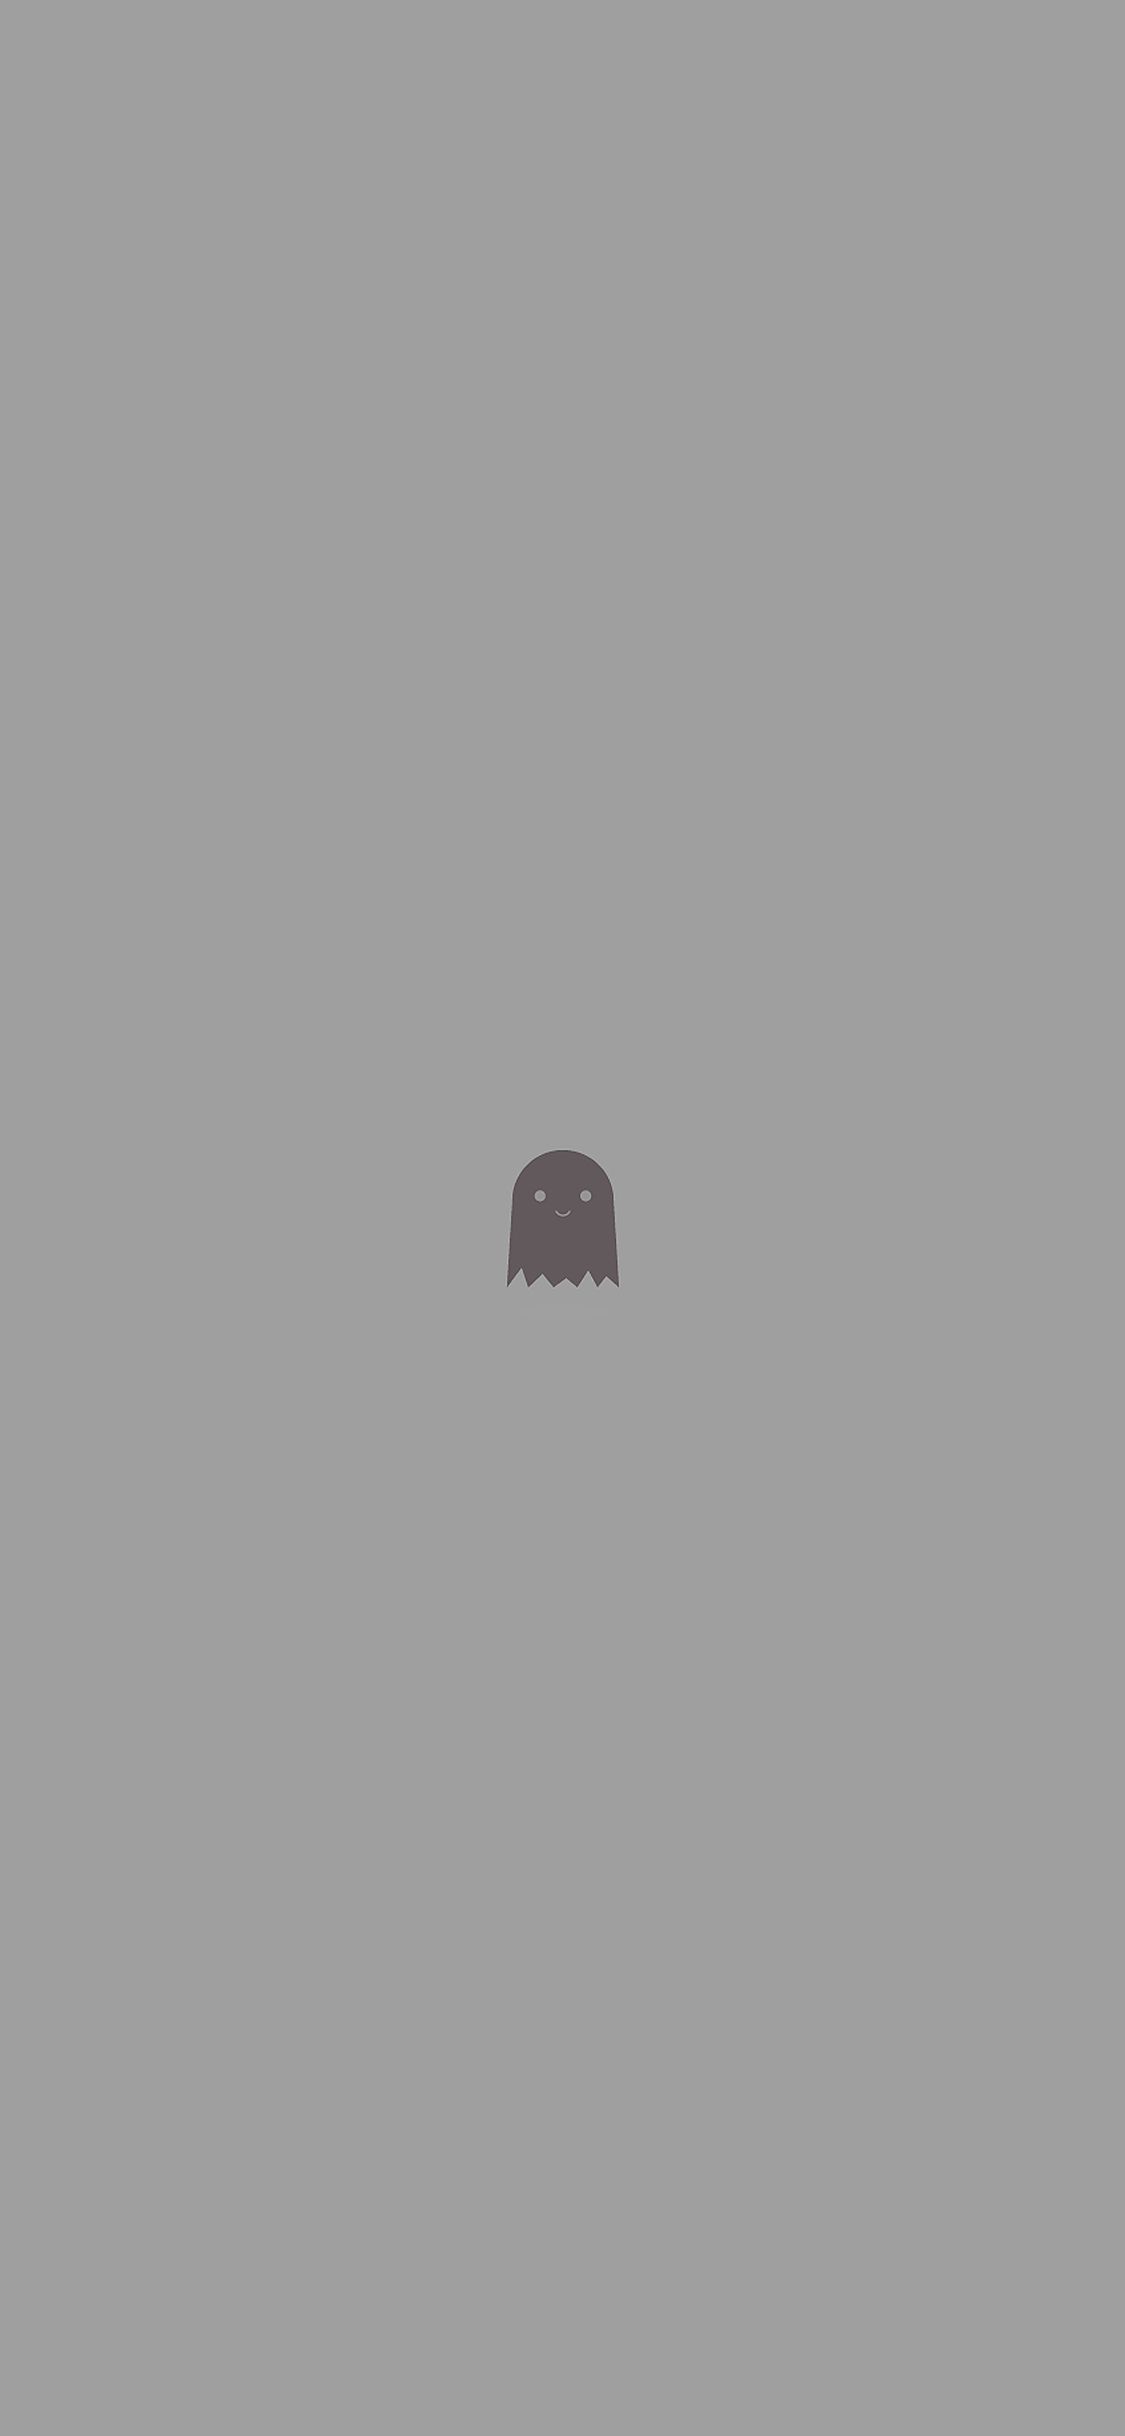 iPhone X wallpaper. cute ghost art character illust minimal simple